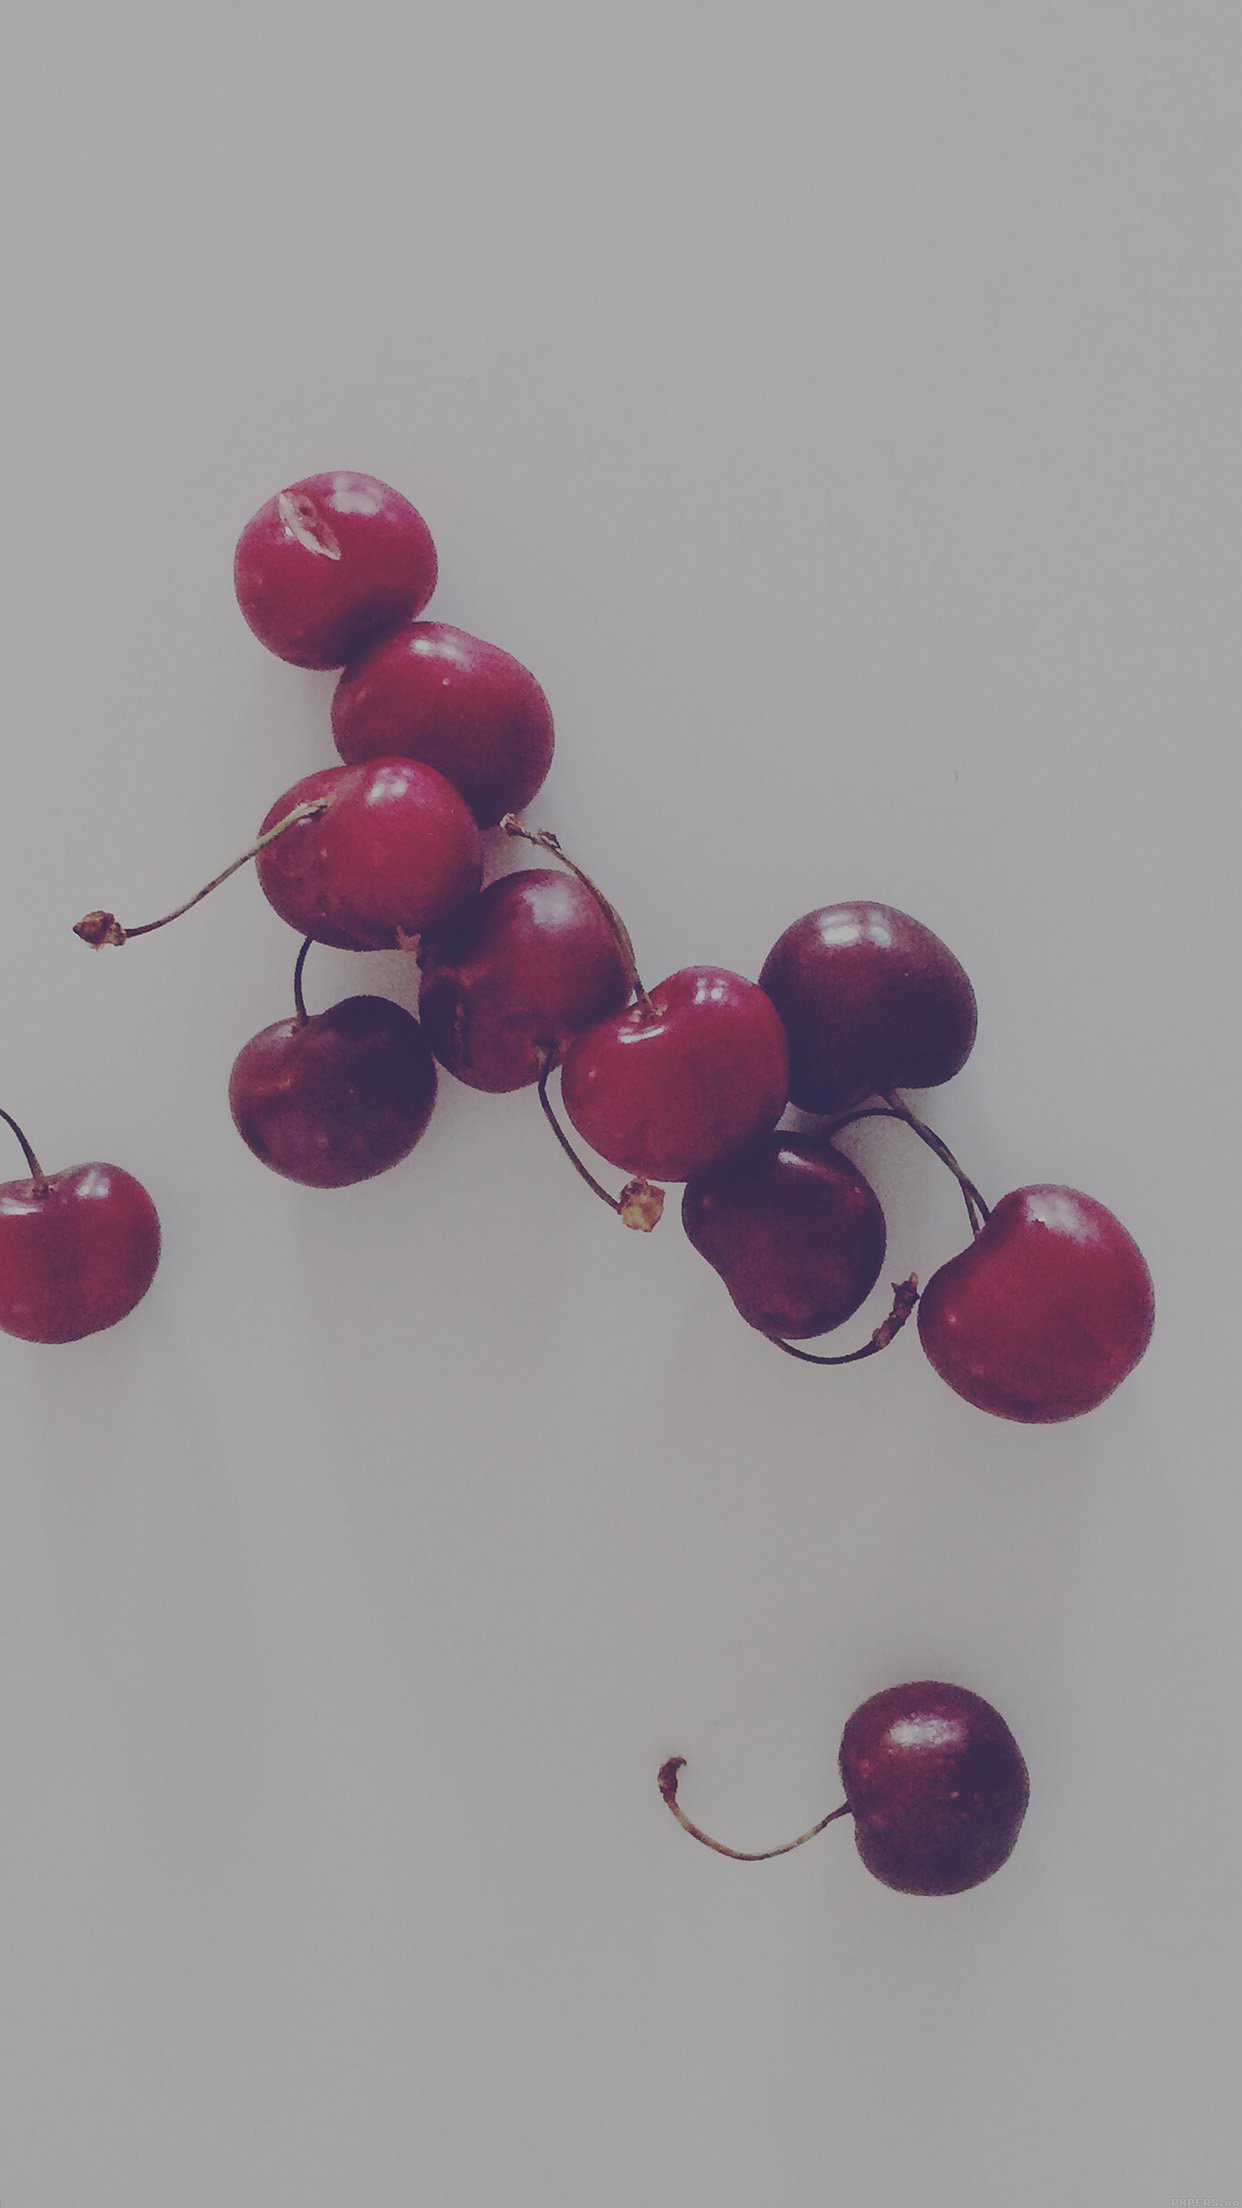 Cherry Red Dark Paula Borowska Fruit Nature Android wallpaper